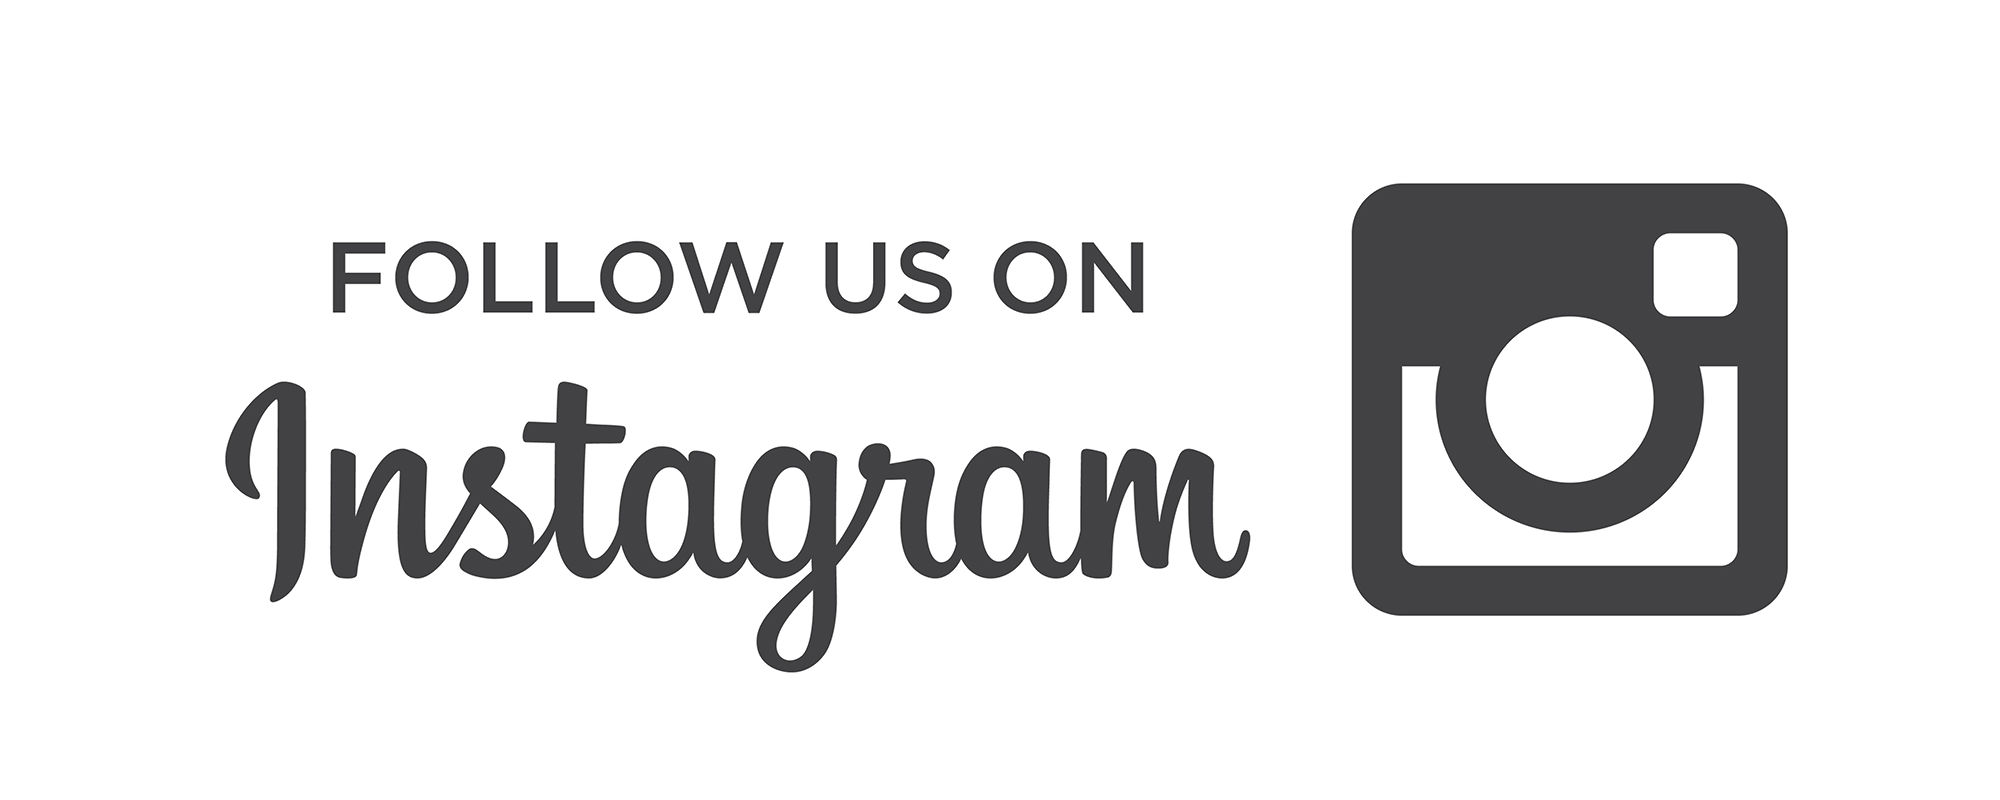 Follow Us On Instagram Logo - Follow On Instagram Icon Image Logo Image